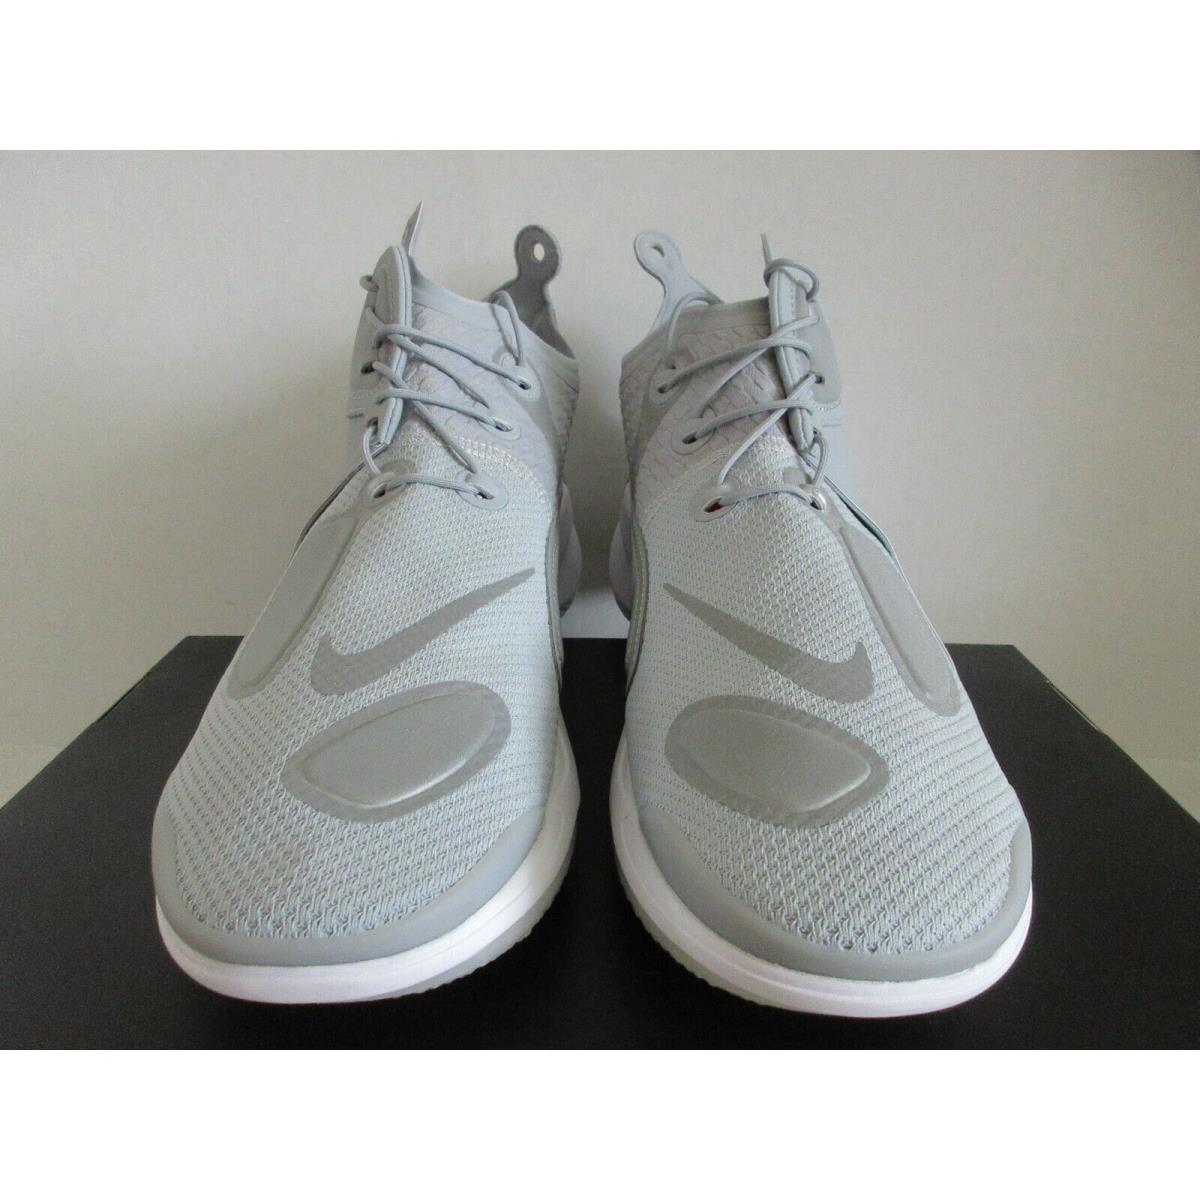 Nike shoes Joyride - Gray 1